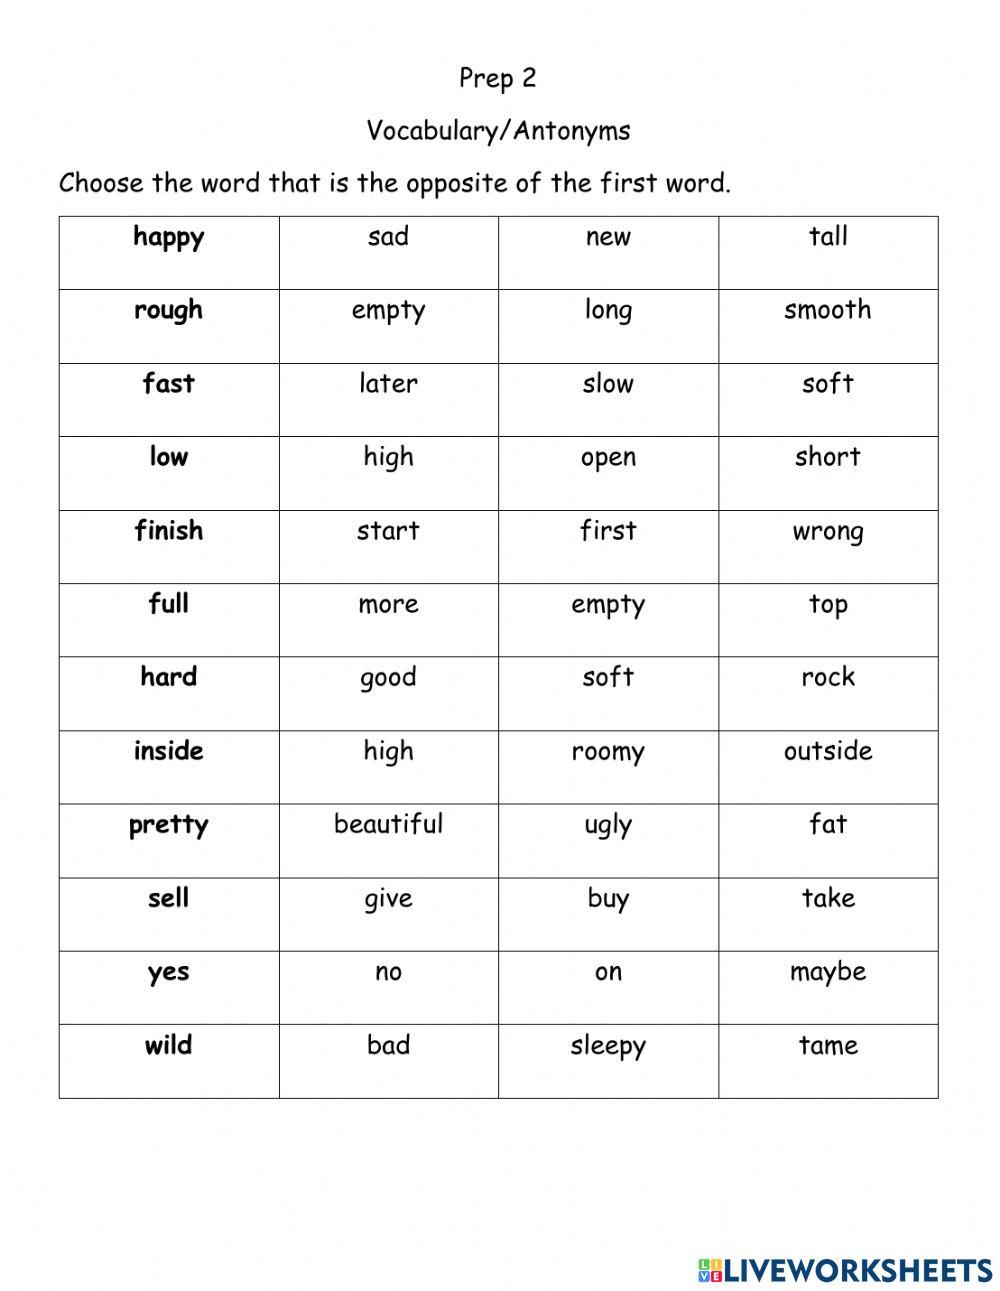 Vocabulary-Antonyms